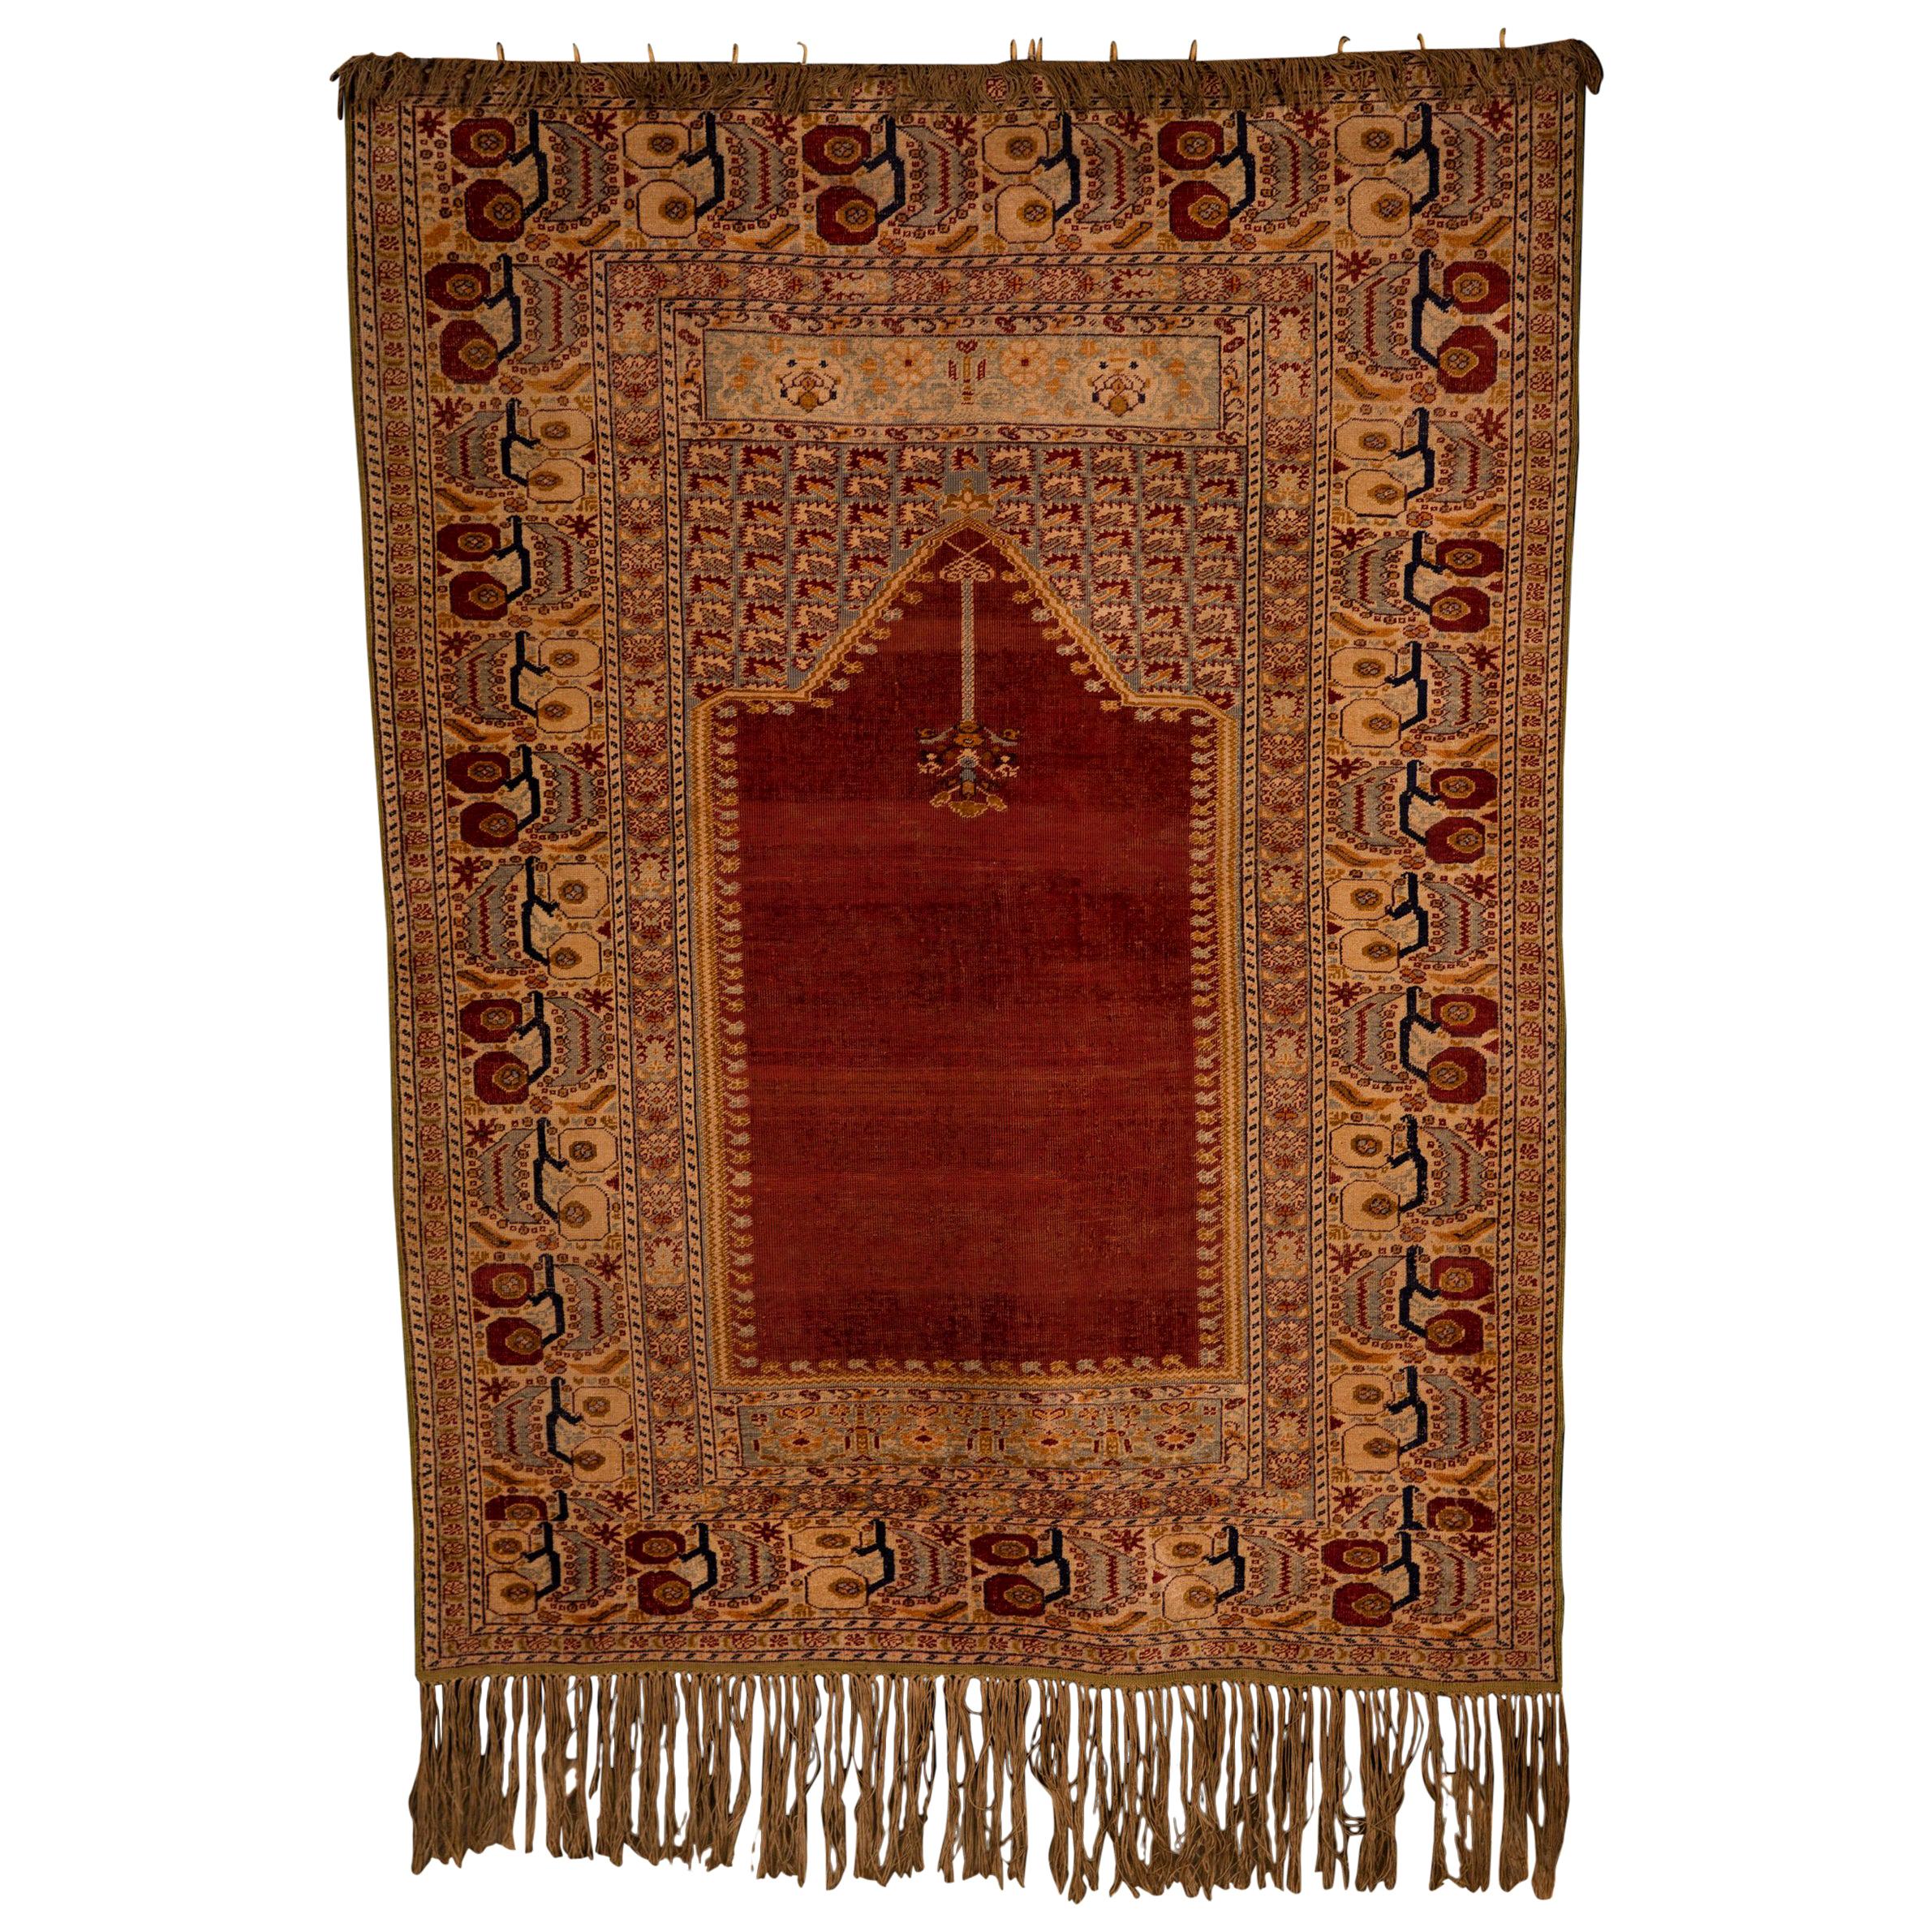 Beautiful Antique Silk Carpet, circa 1900